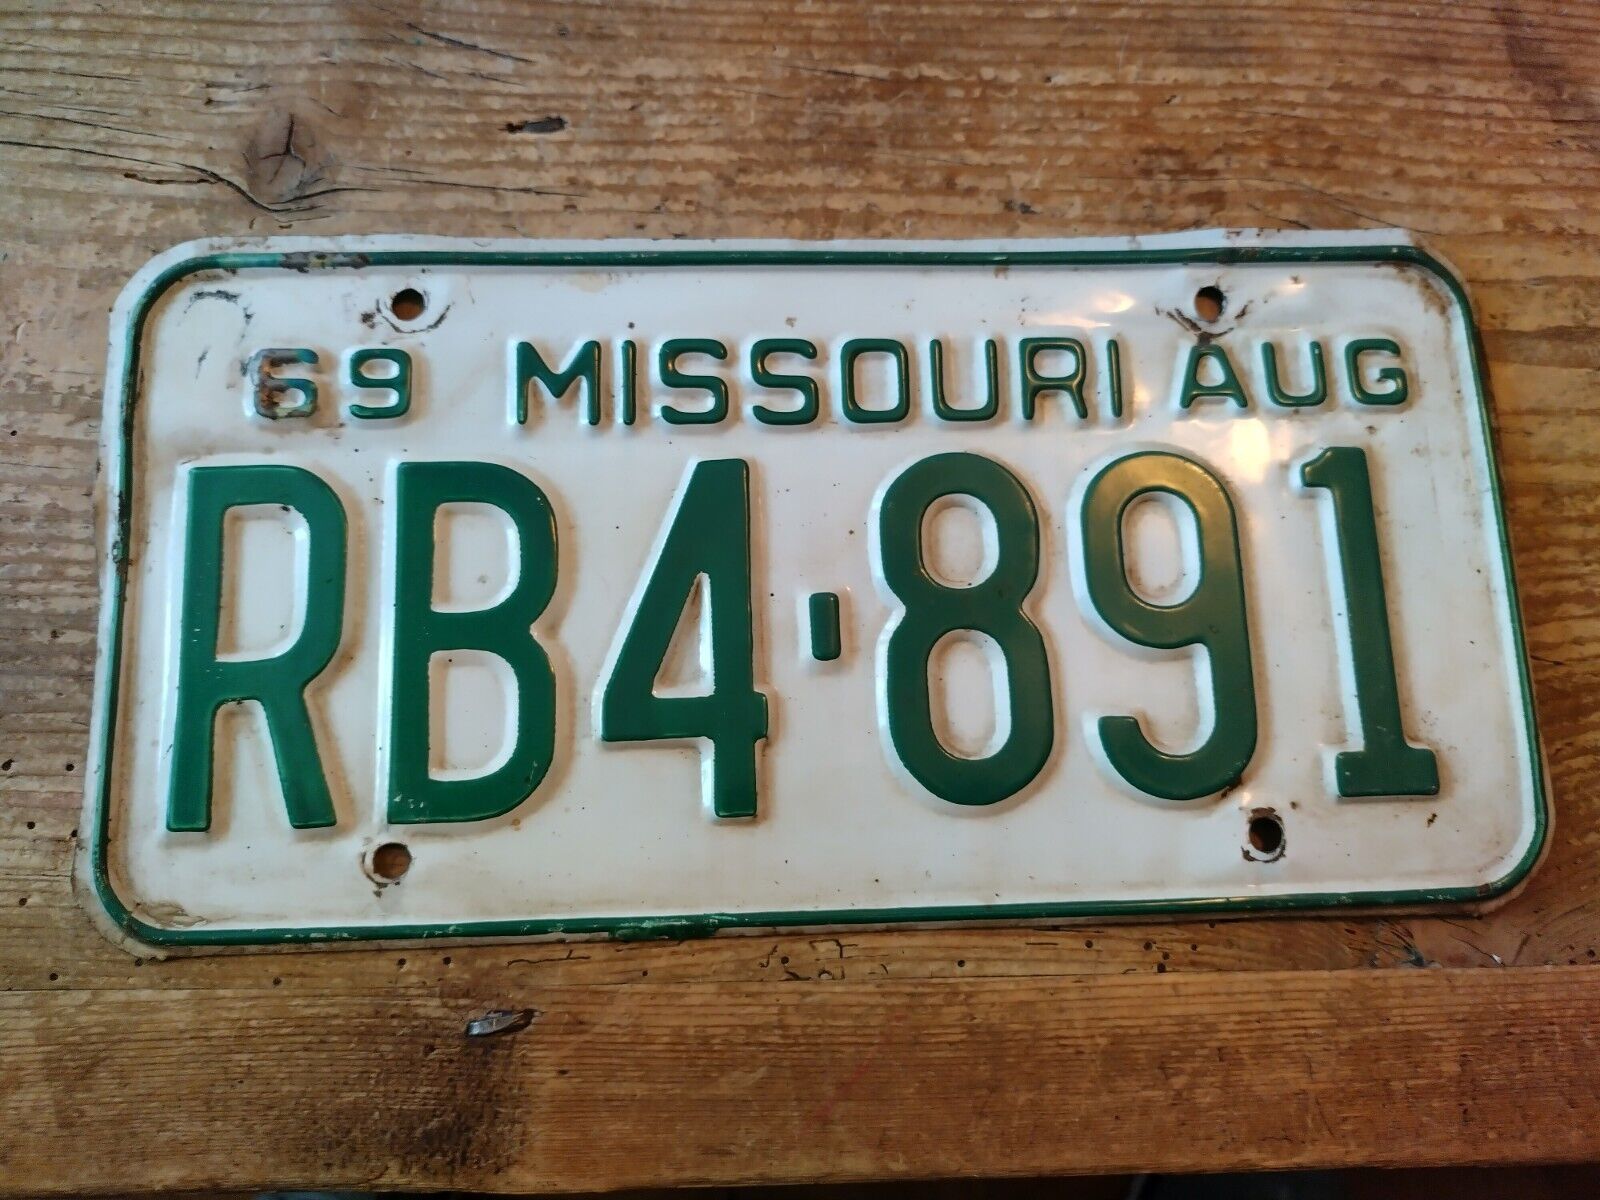 1969 Missouri Passenger Car License Plate #RB4-891